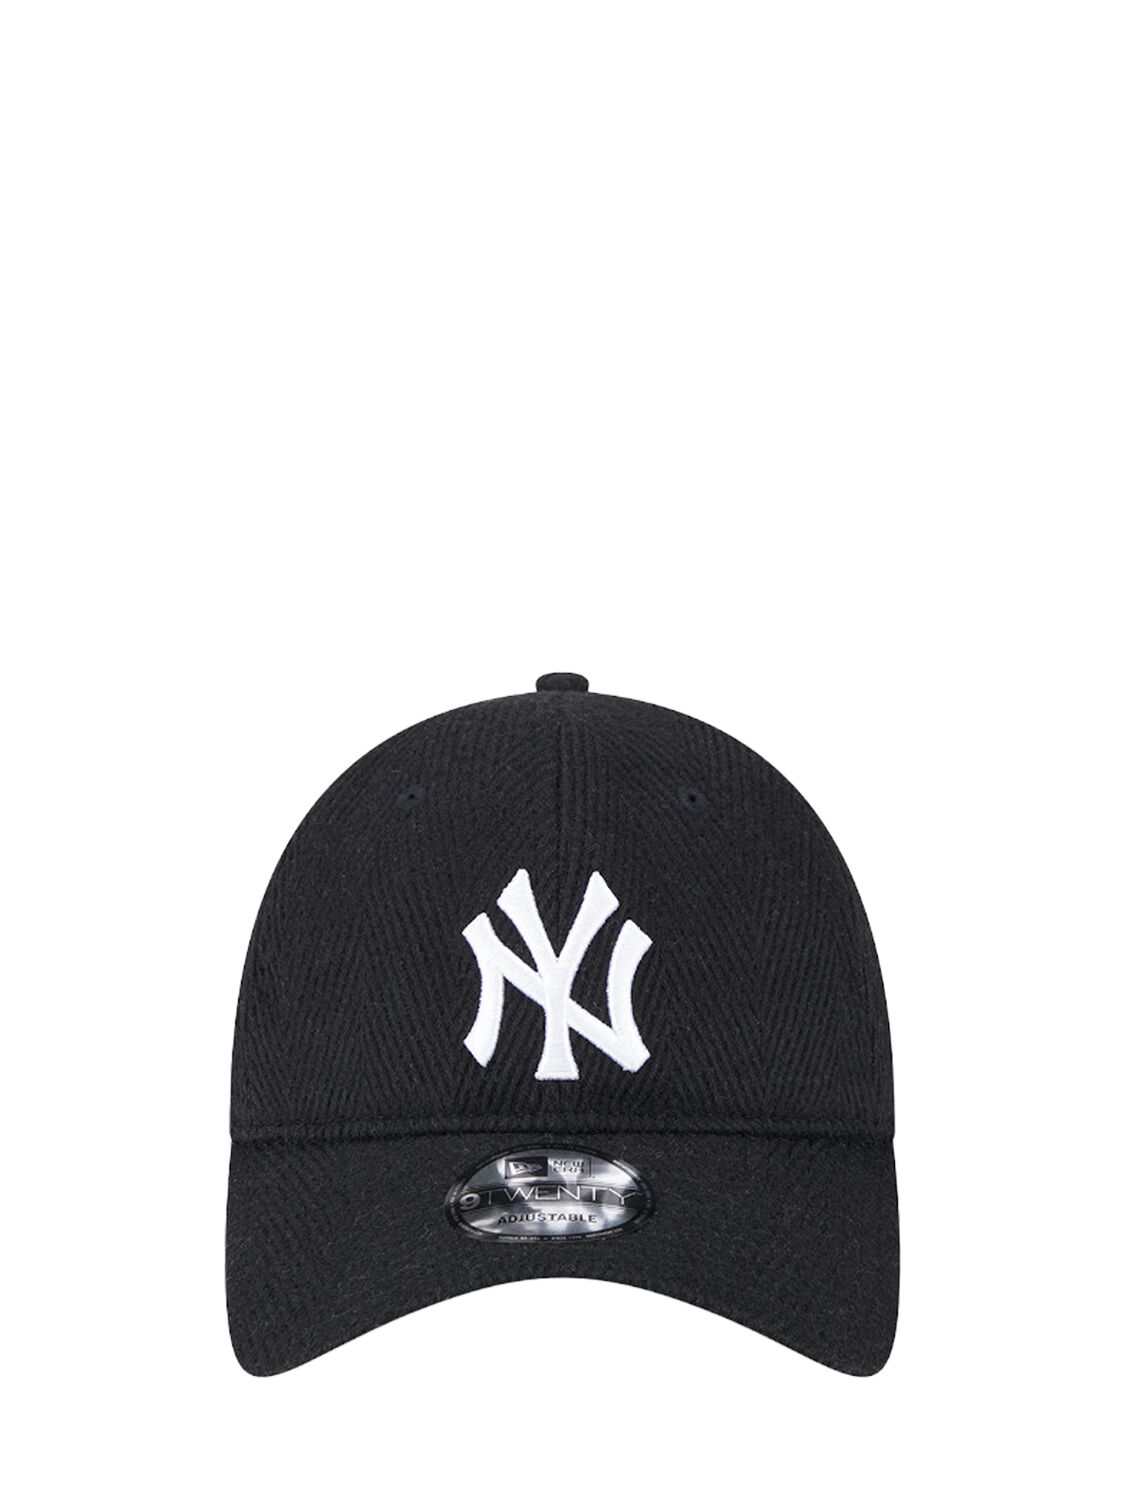 Image of 9twenty New York Yankees Herringbone Hat